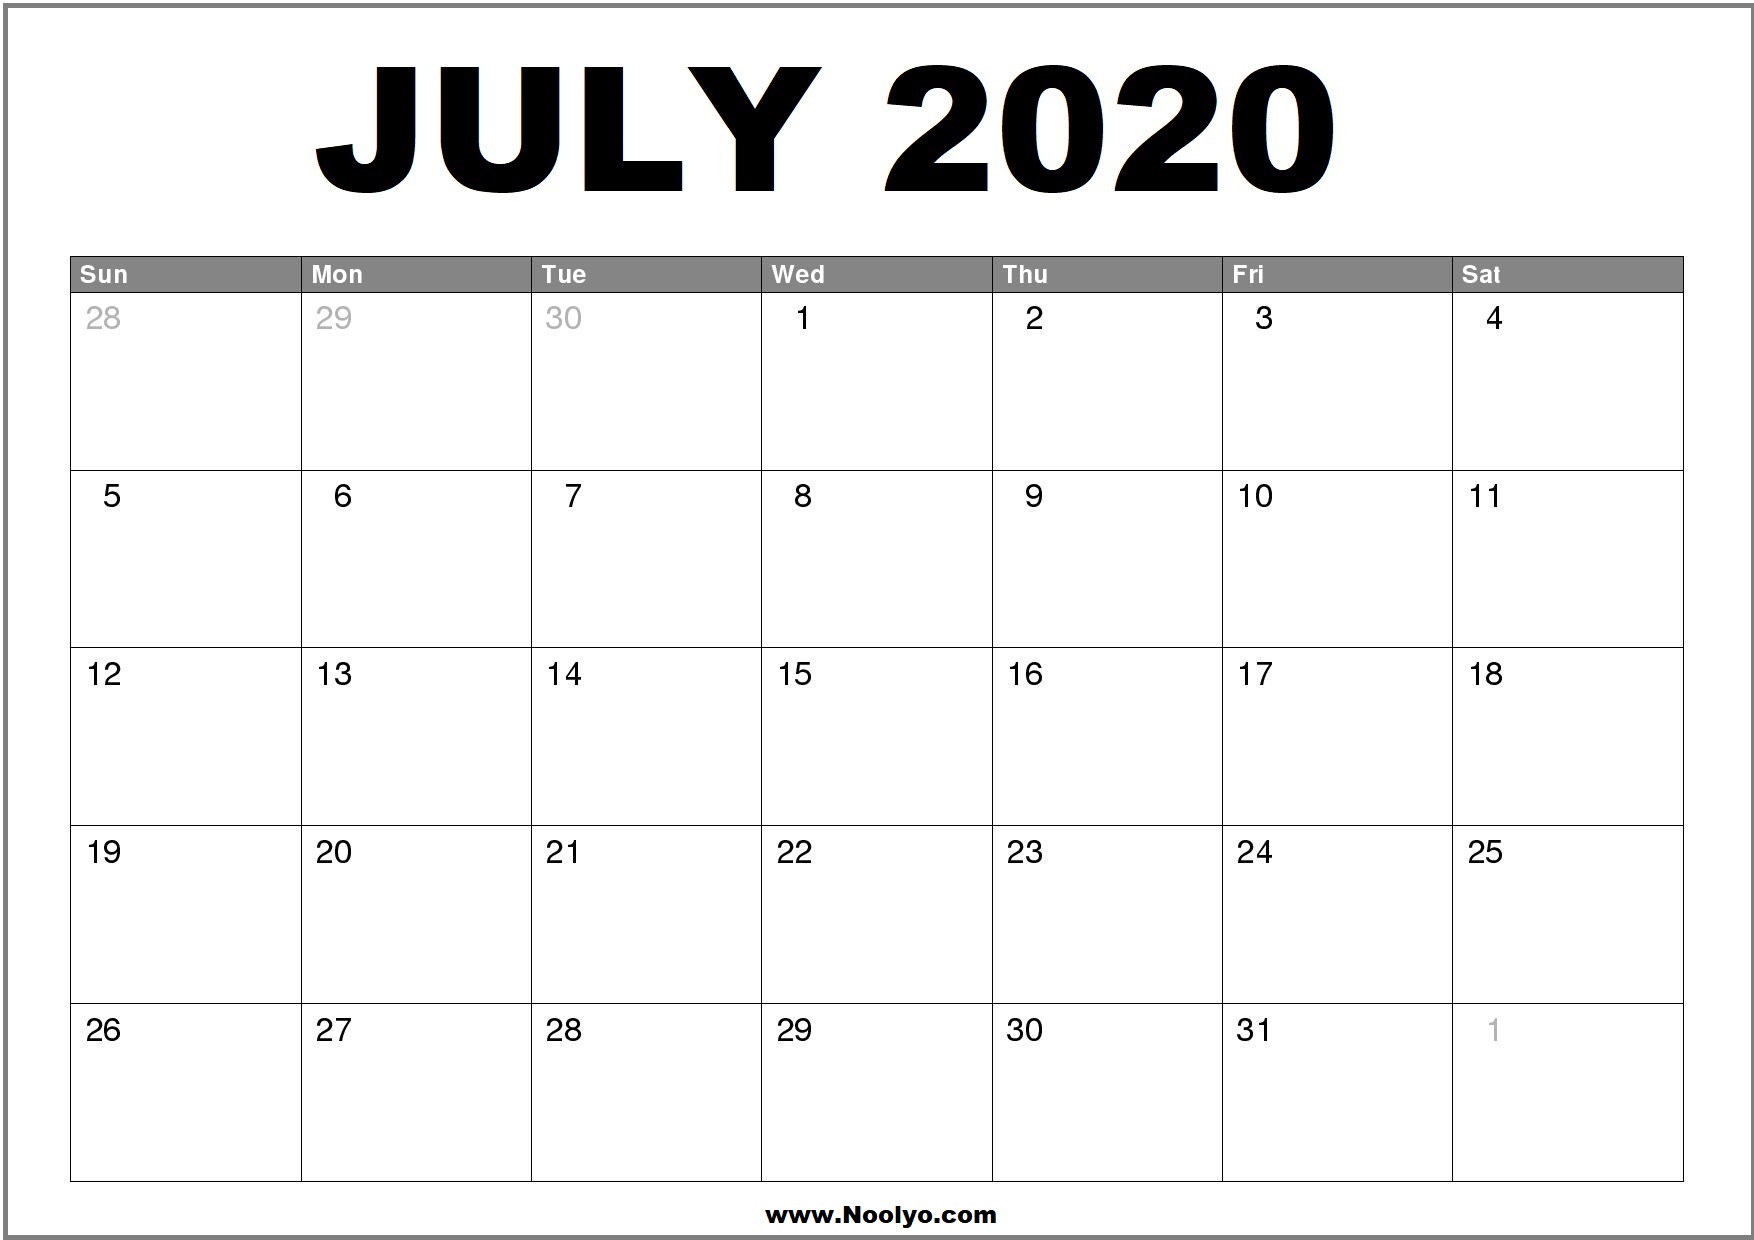 July 2020 Calendar Printable – Free Download